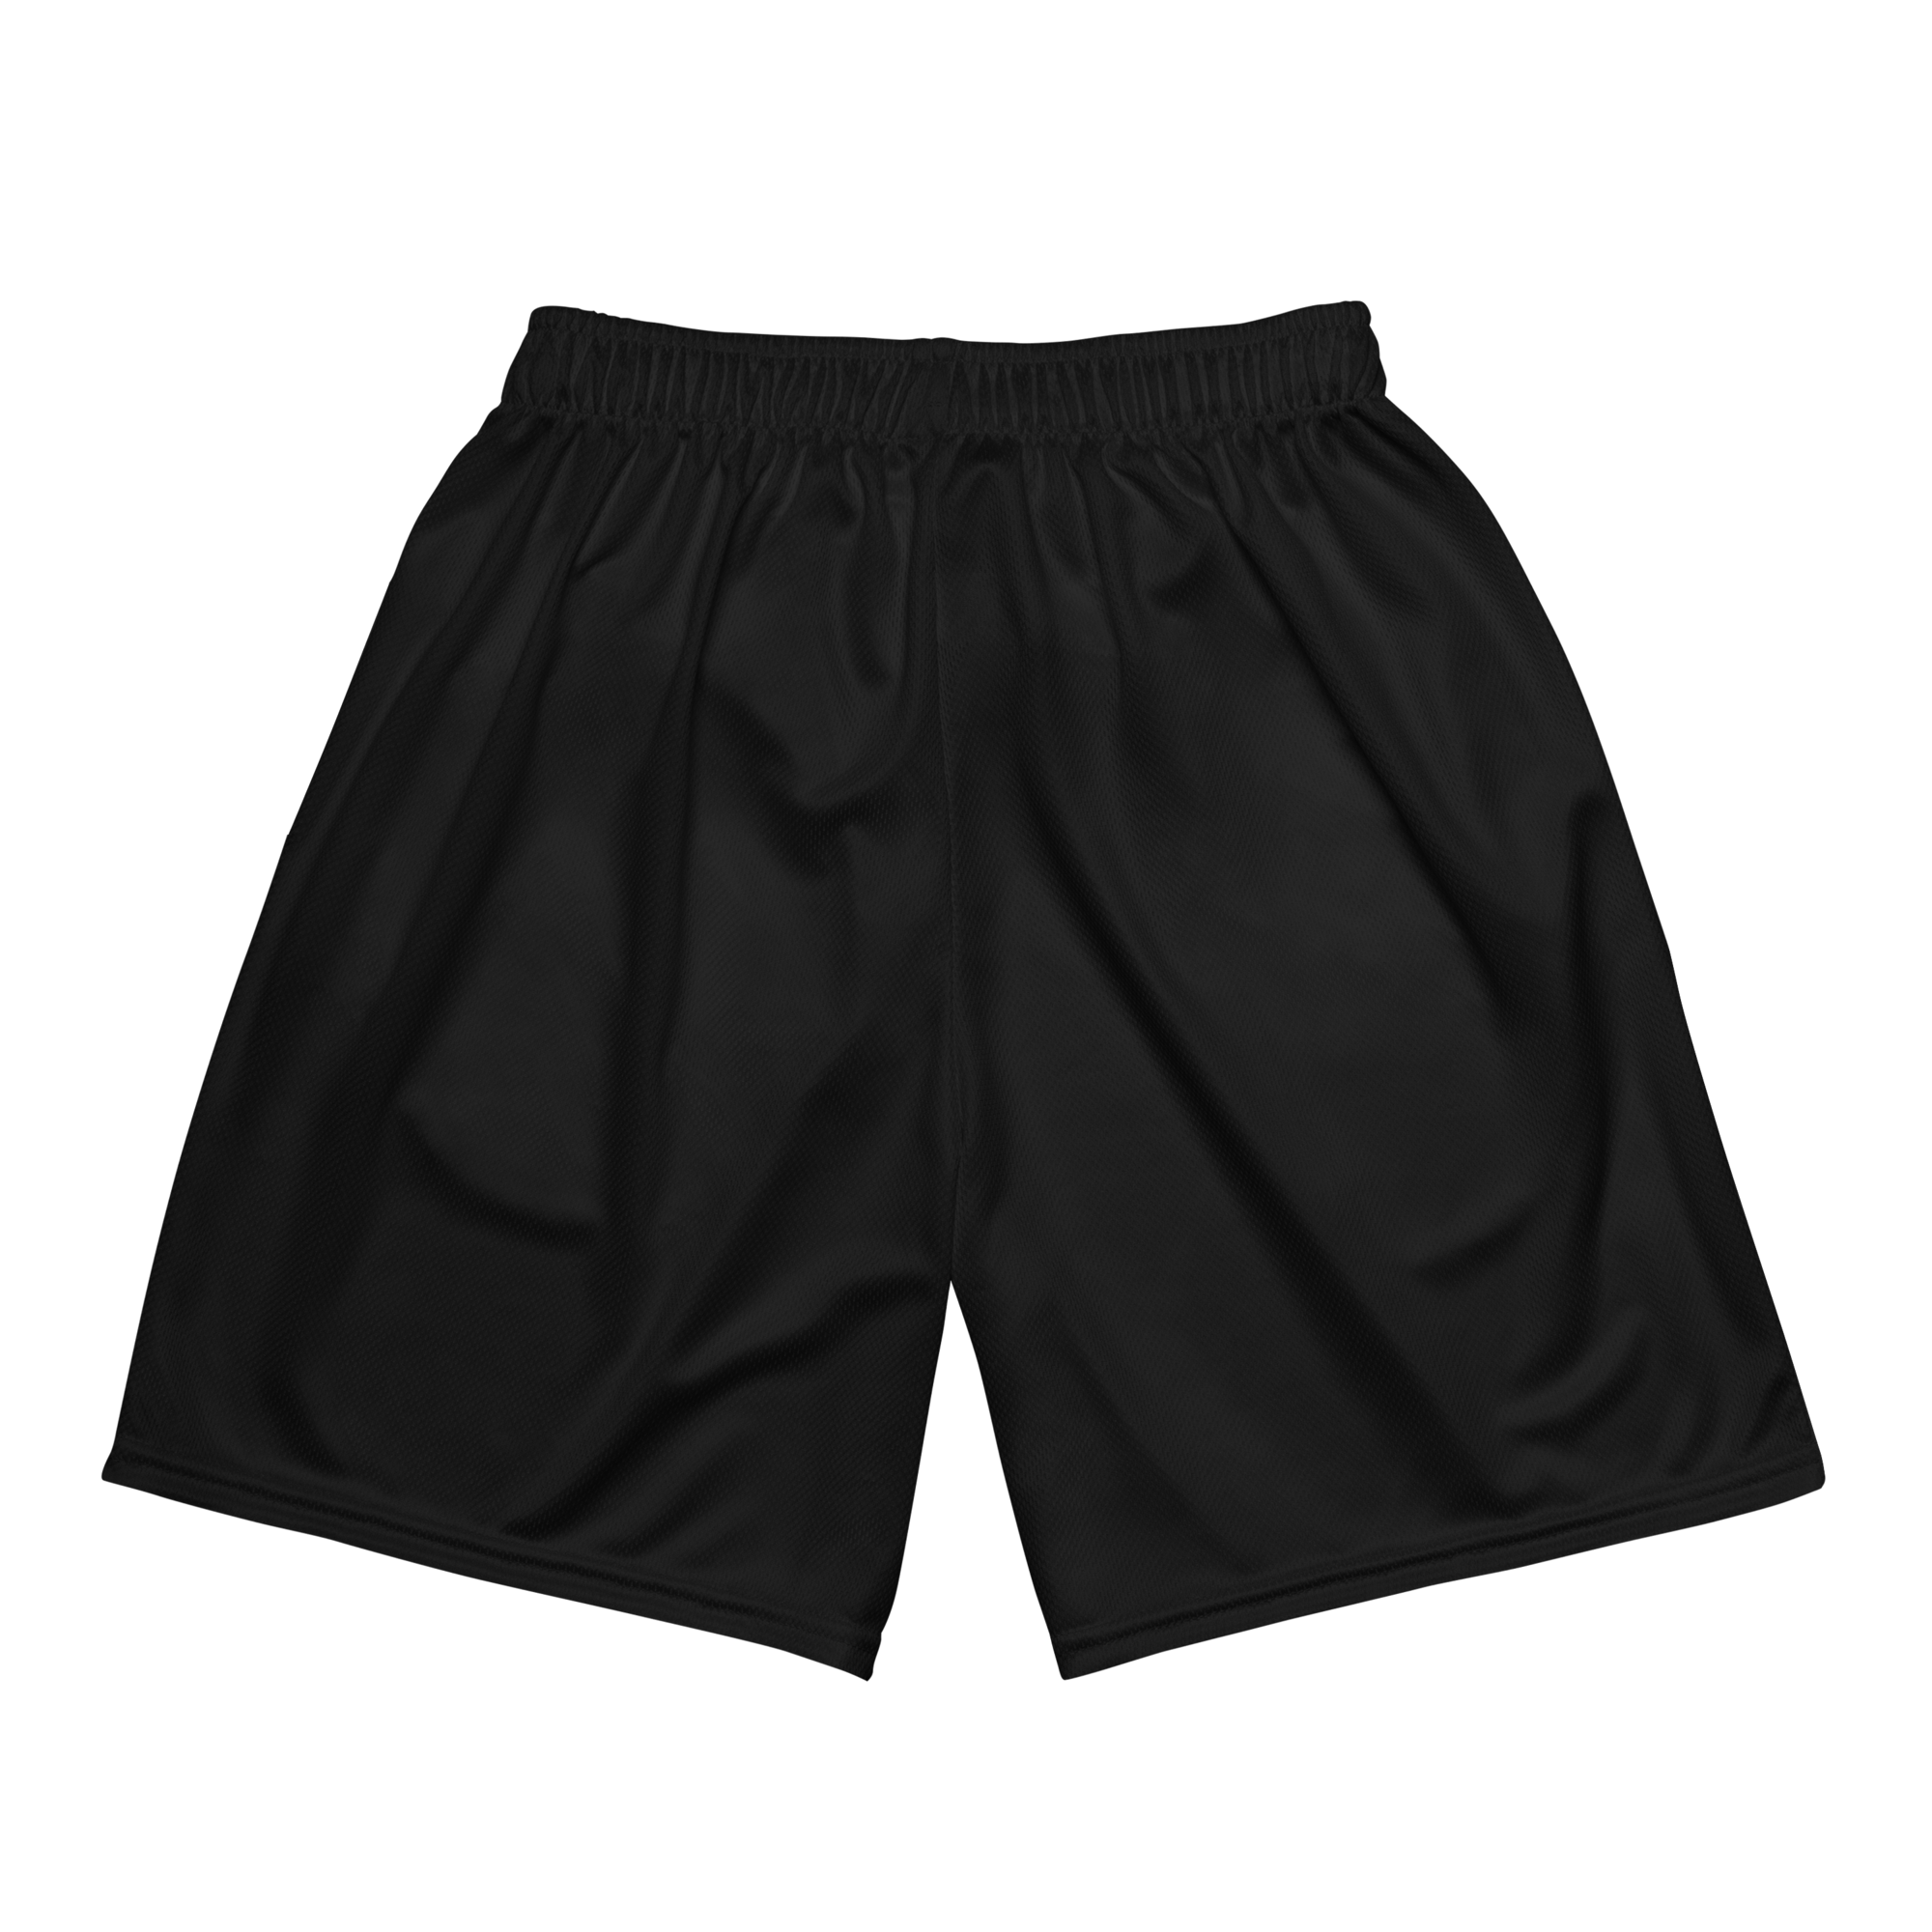 A.C.  666 Unisex mesh shorts